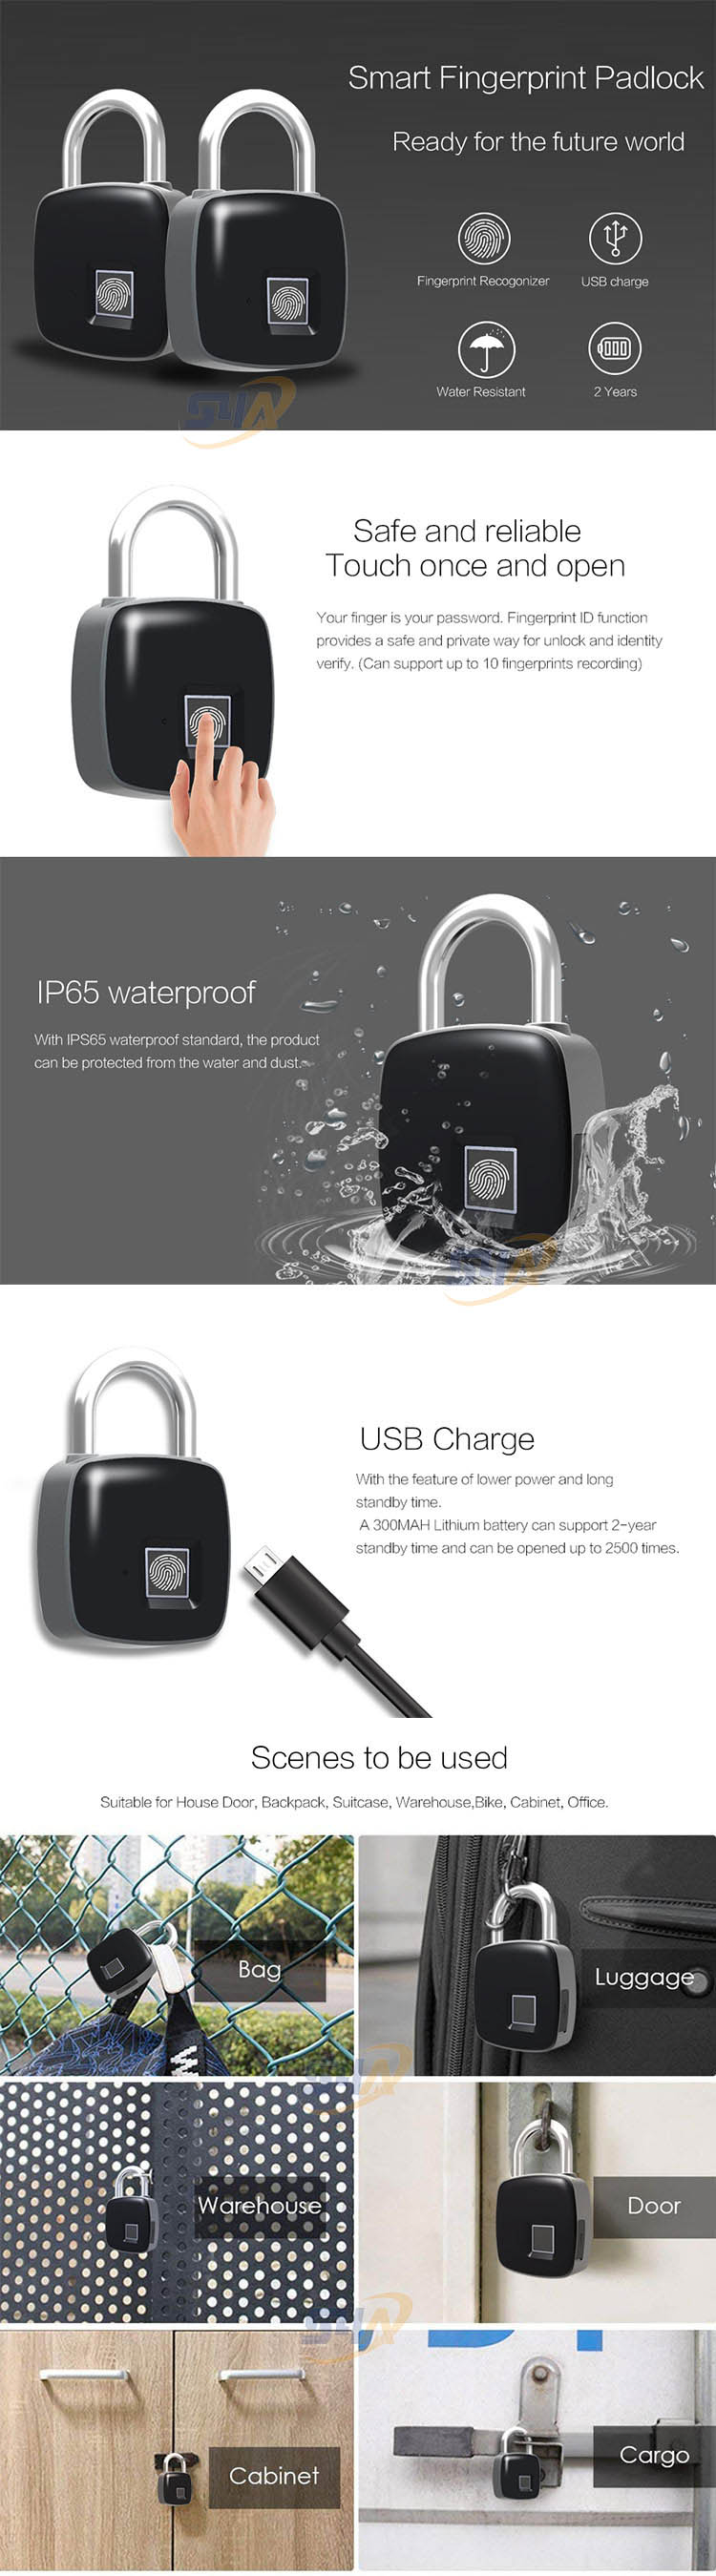 Fingerprint lock with USB